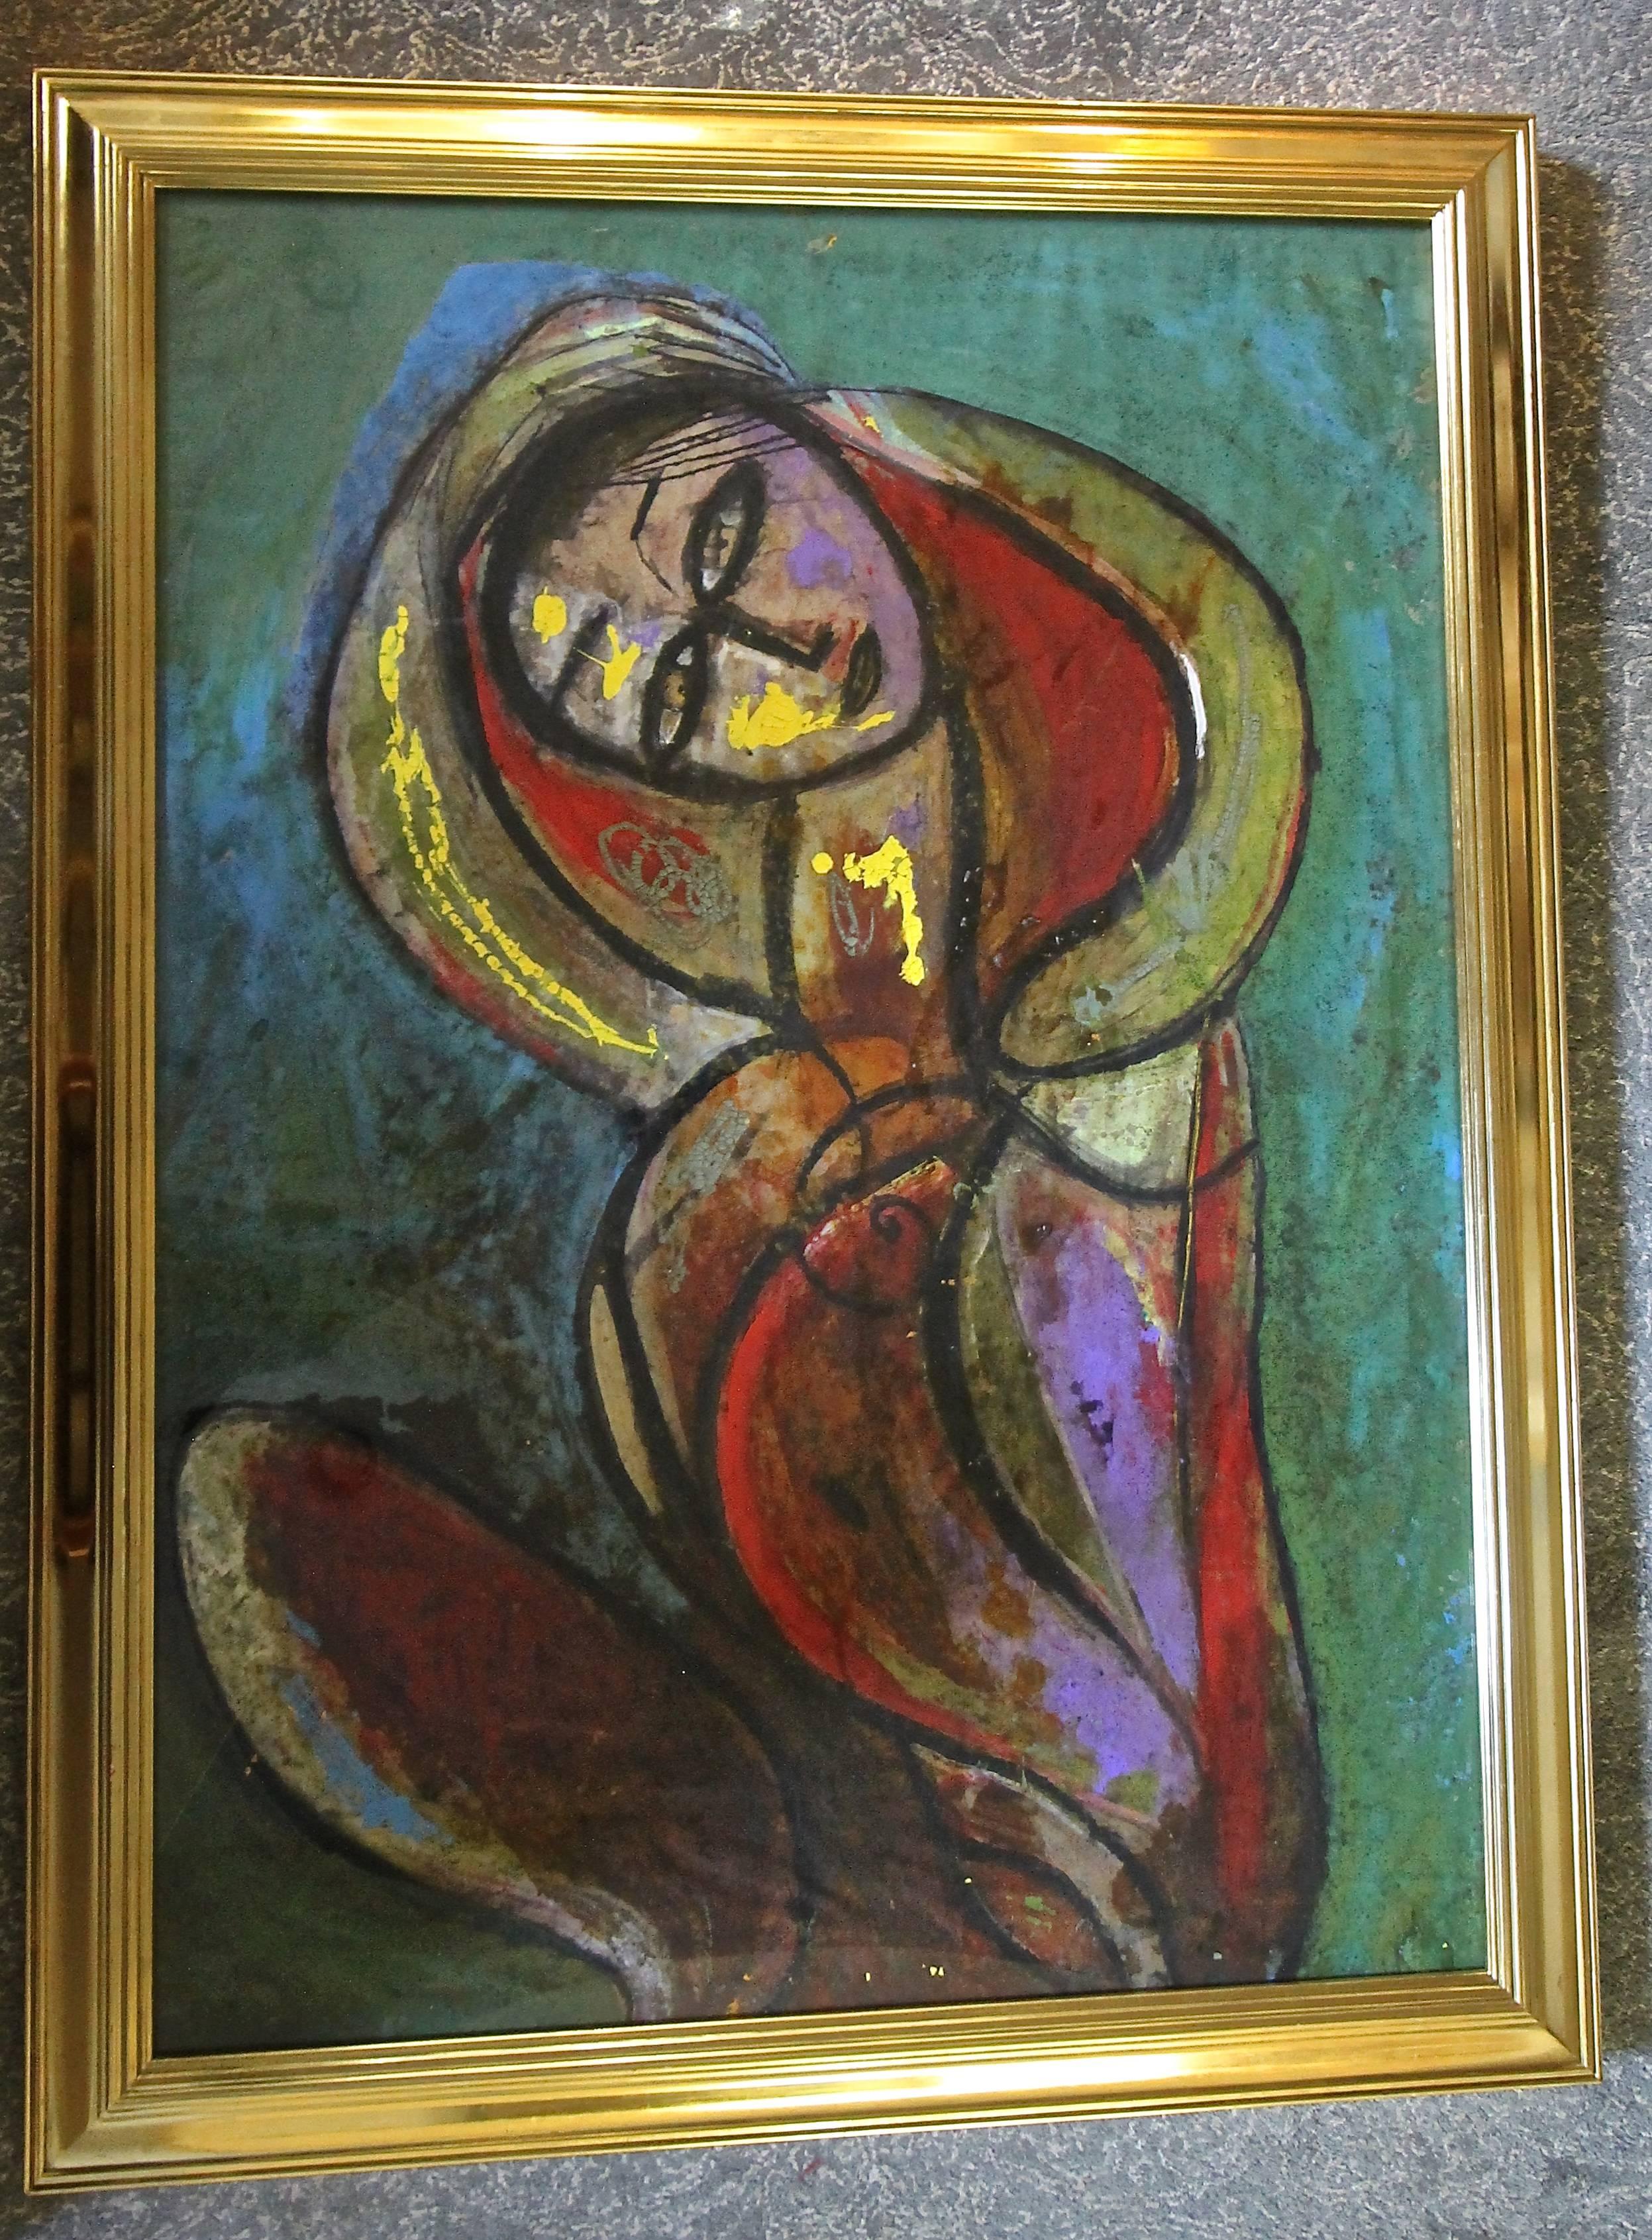 Large original pigment on cork abstract female painting by Jamali, recognized artist of Mystical Expressionism. Framed in 23-karat giltwood frame. Original artist label on back.